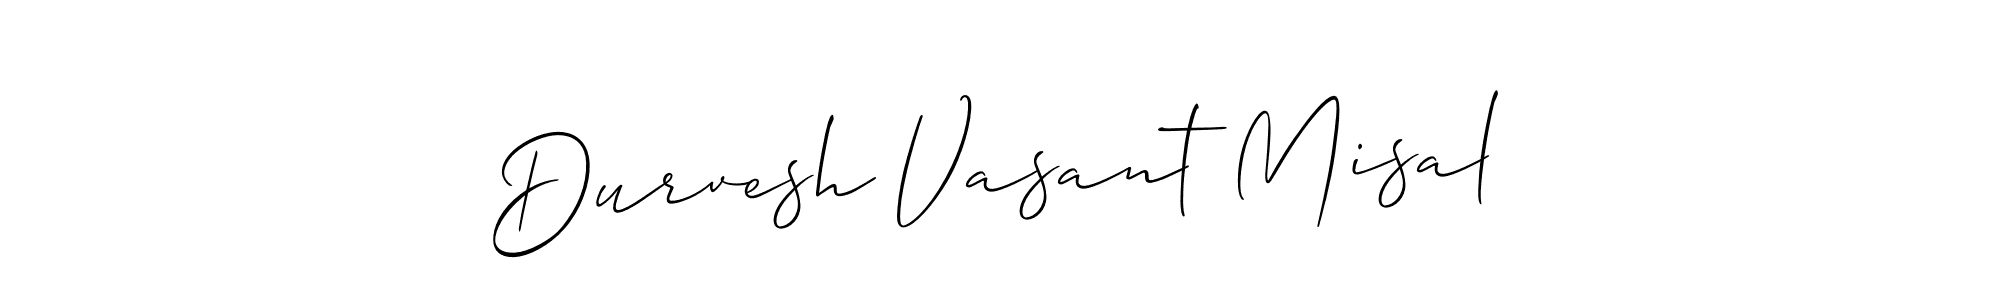 How to Draw Durvesh Vasant Misal signature style? Allison_Script is a latest design signature styles for name Durvesh Vasant Misal. Durvesh Vasant Misal signature style 2 images and pictures png